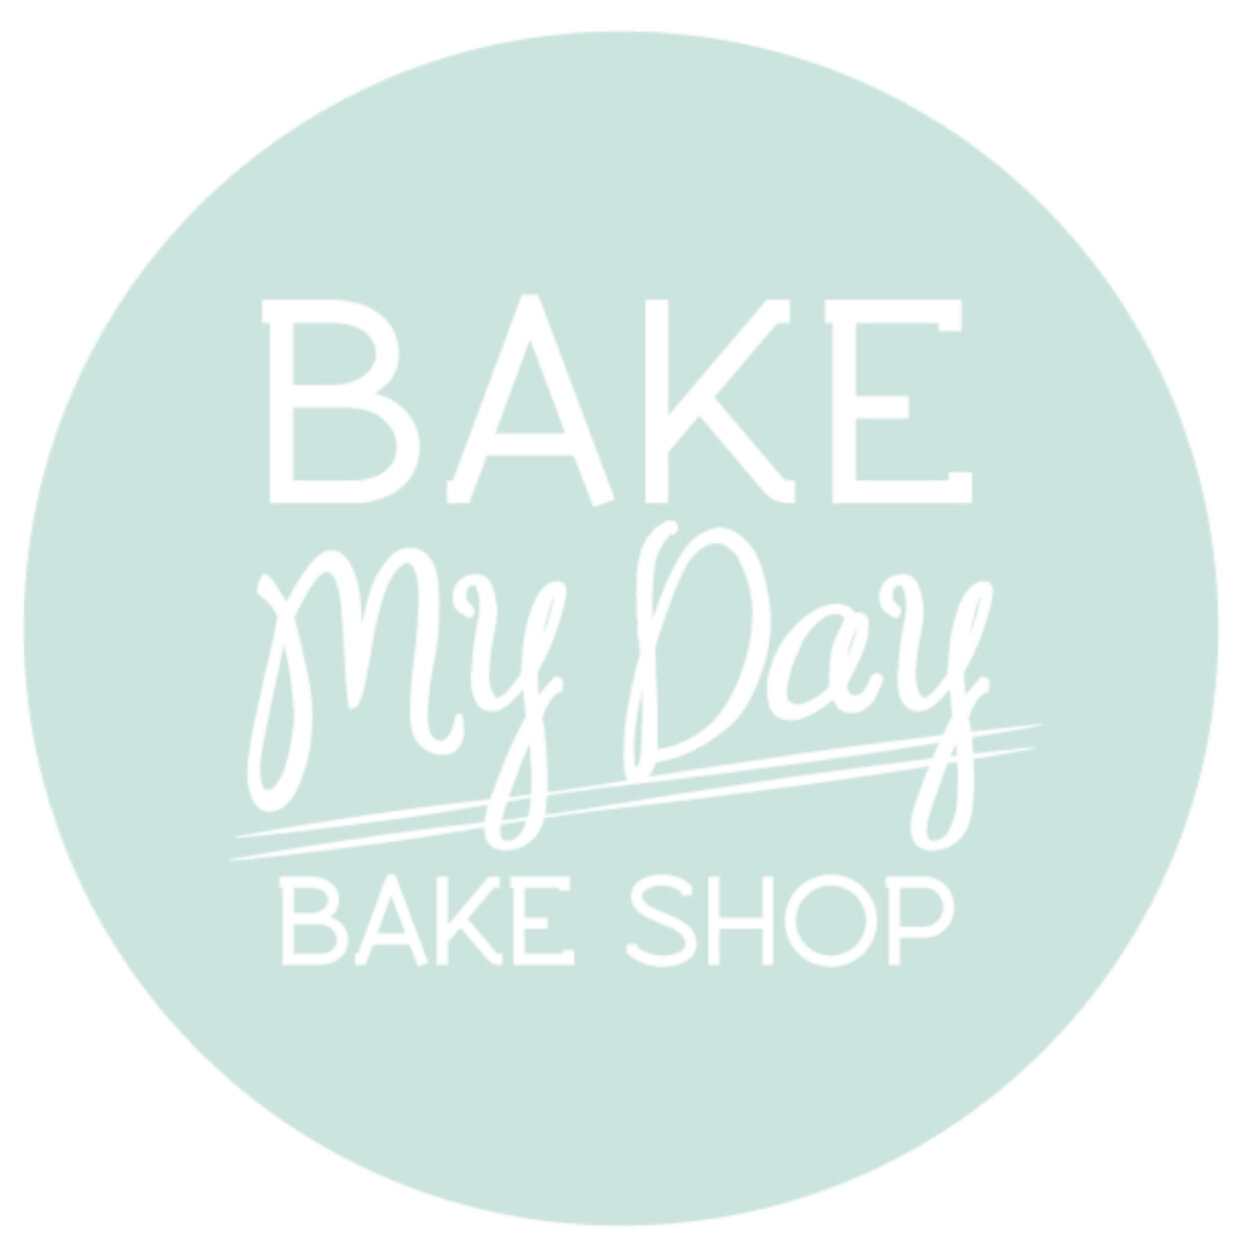 Bake My Day